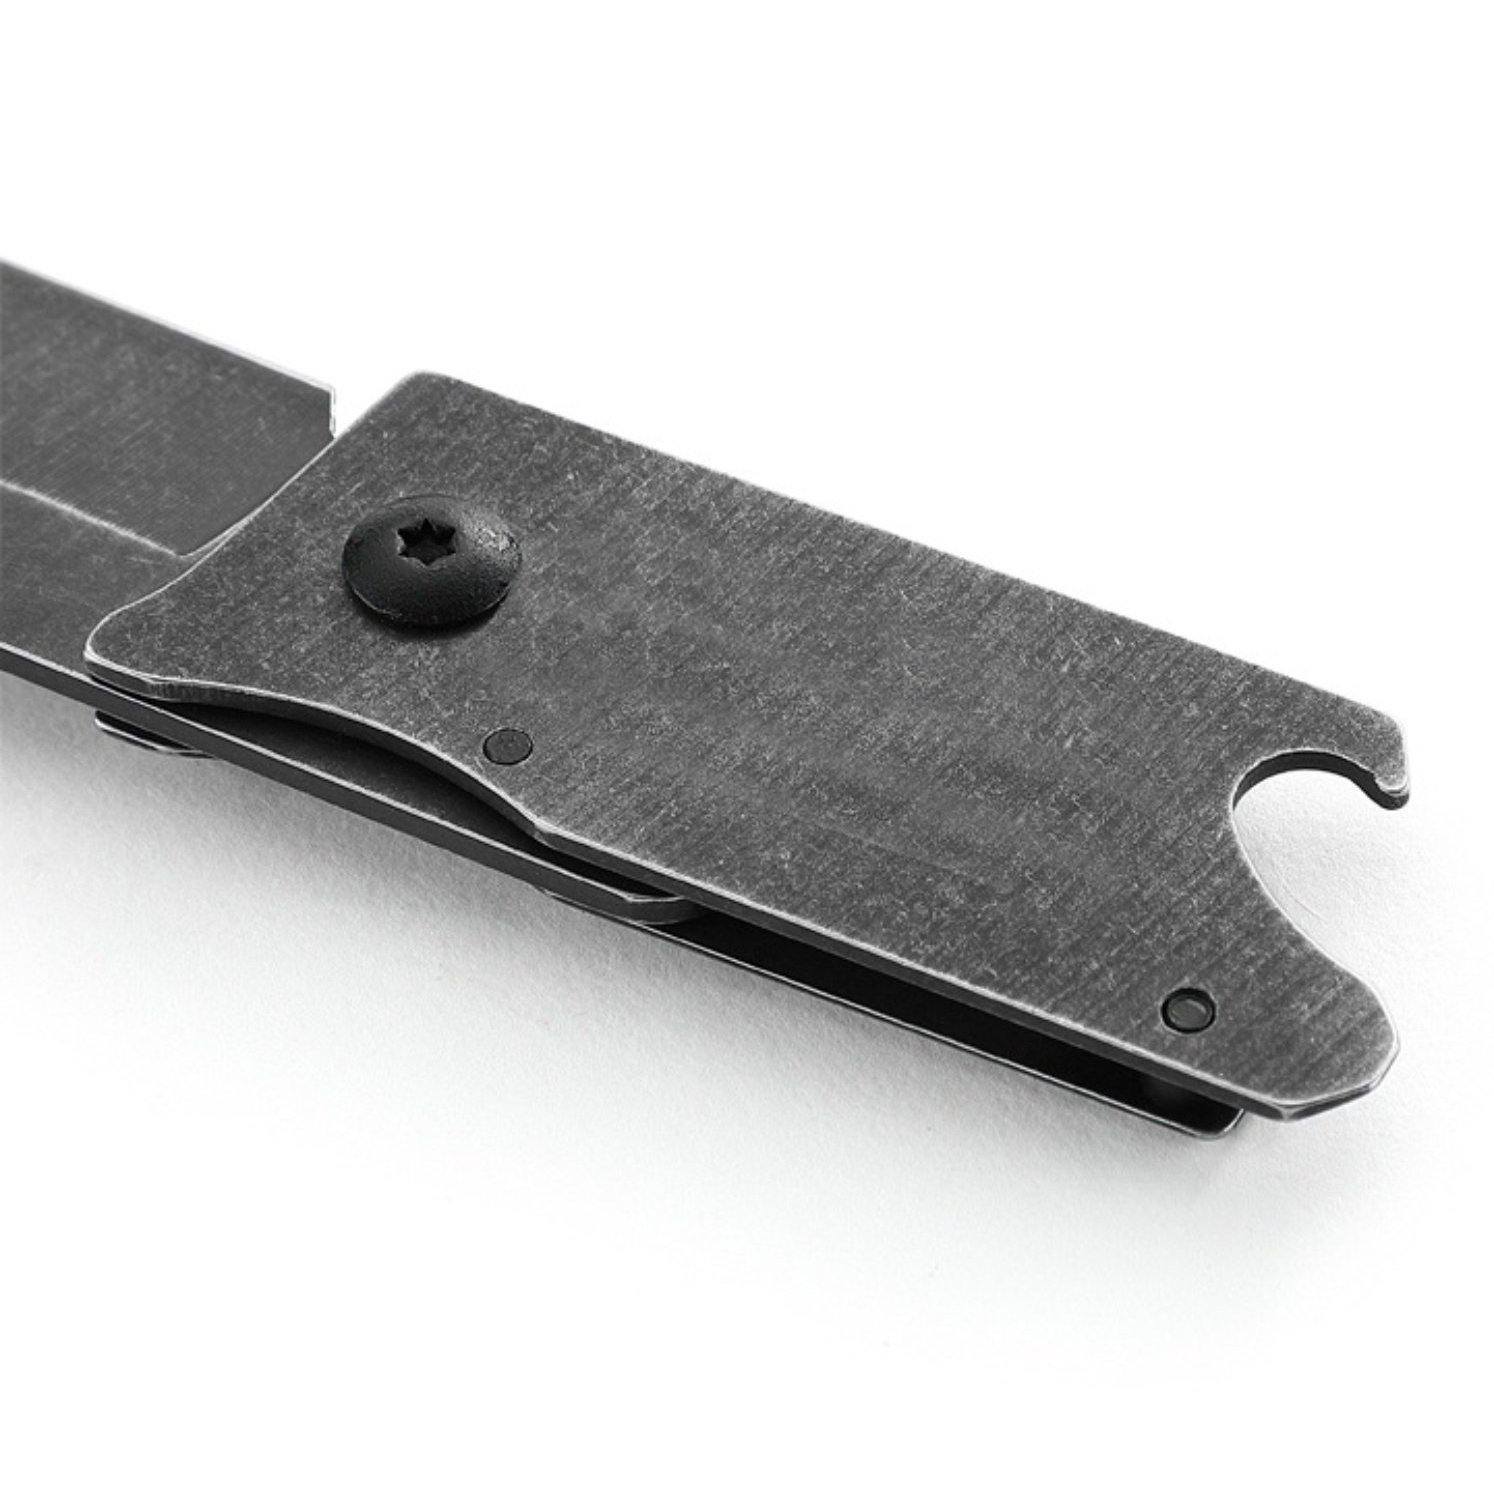 Keychain Knife Steel with Opener - Silipac